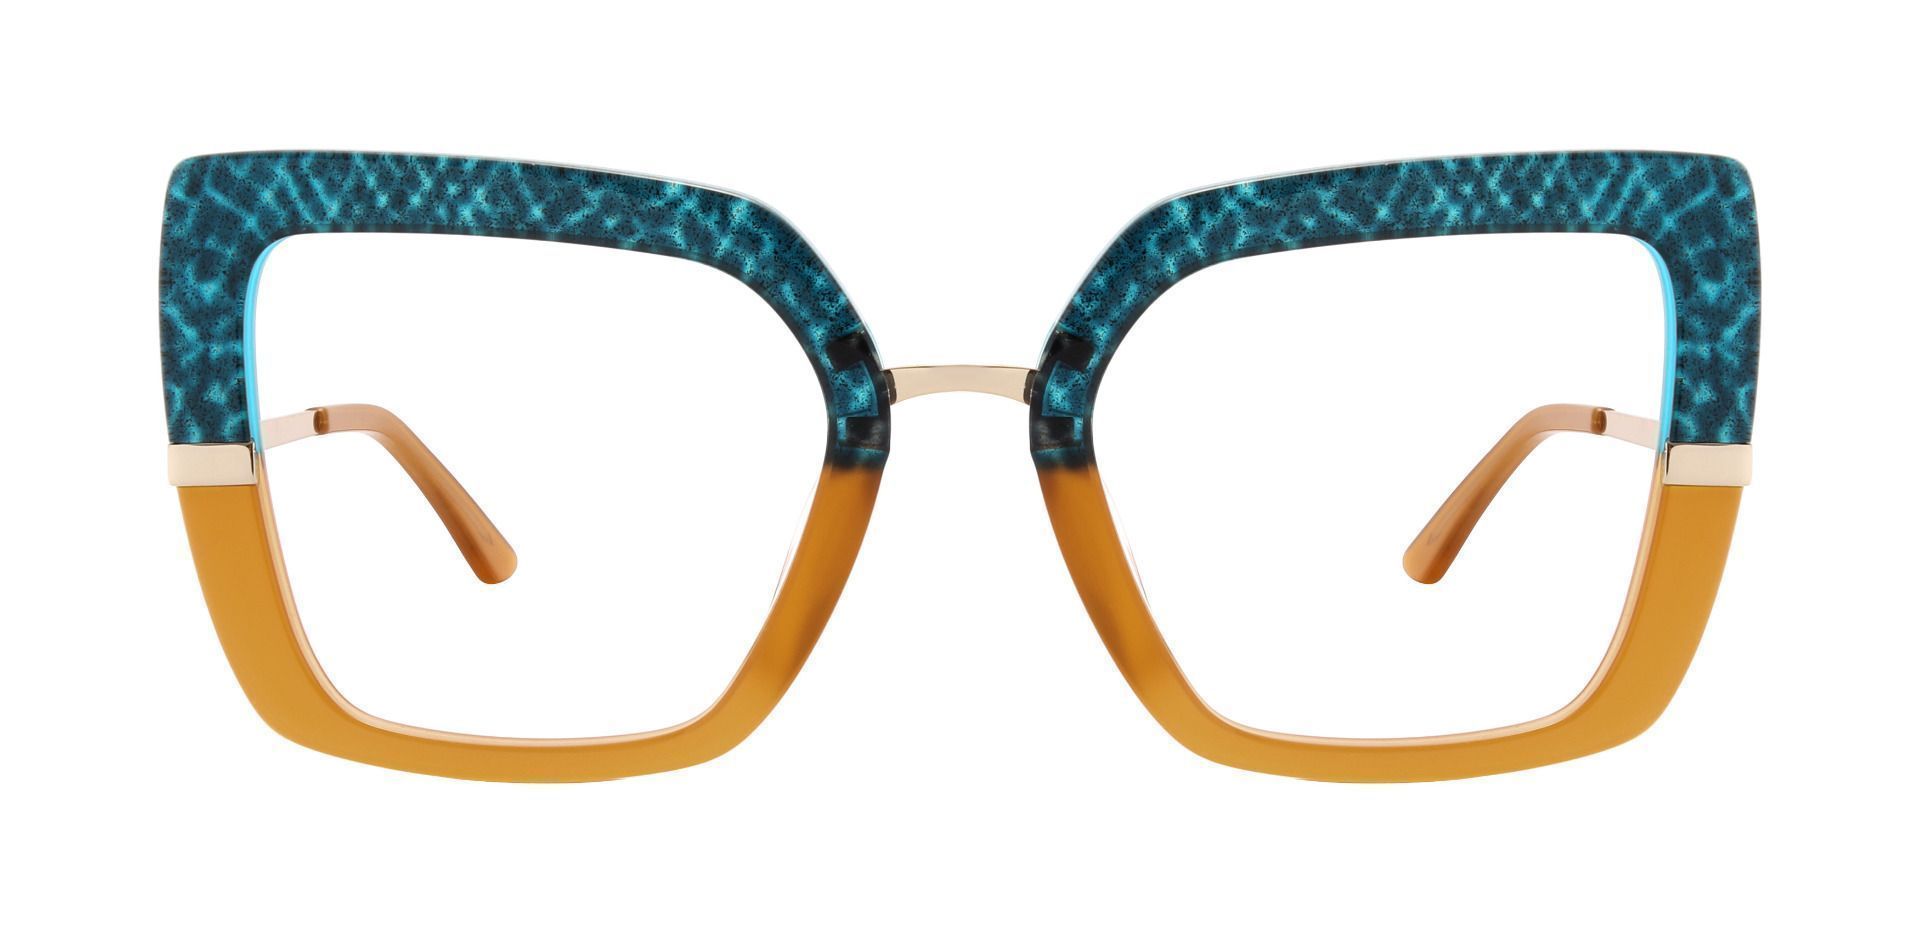 Tokyo Geometric Prescription Glasses - Two